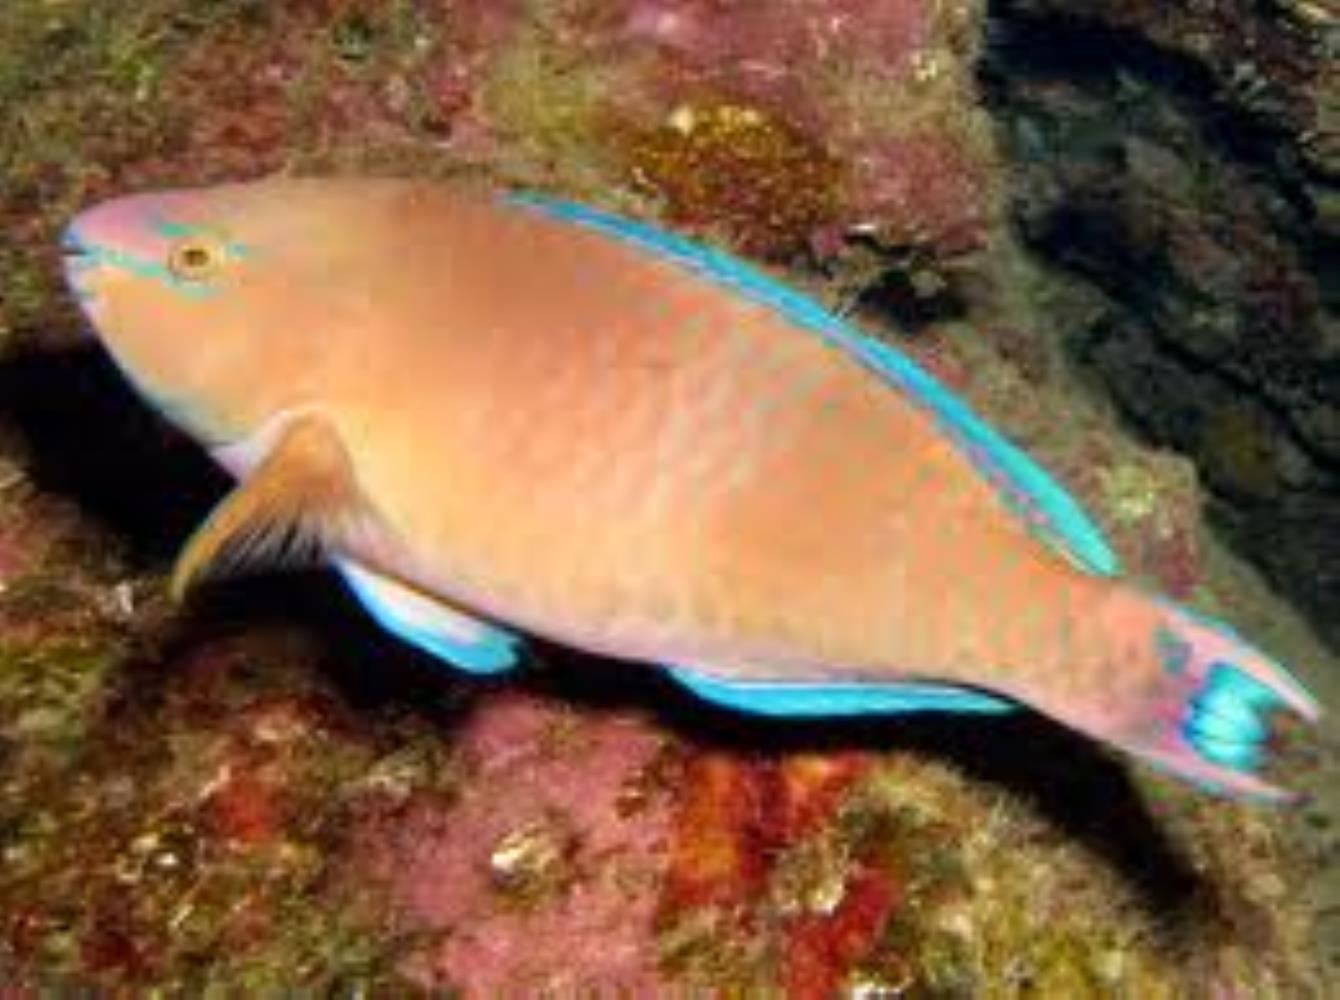 Regal Parrotfish